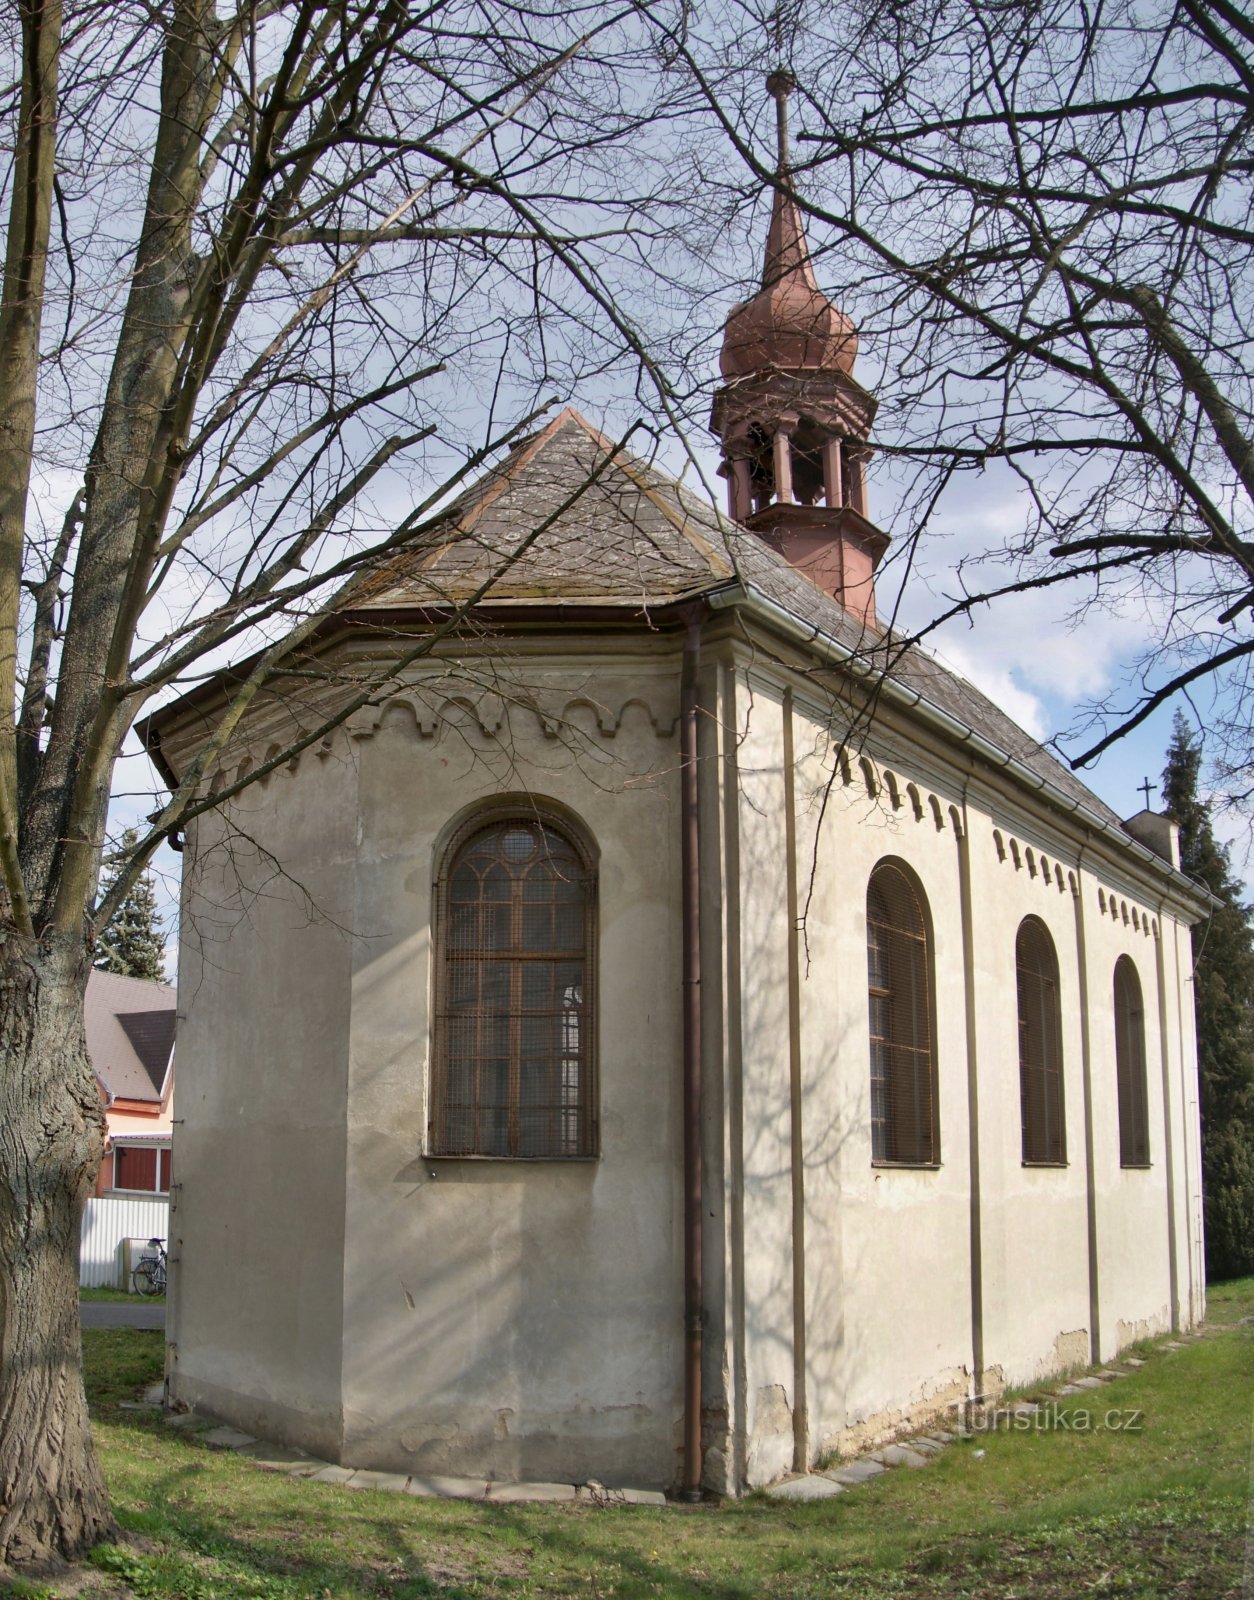 Dolní Temenice (Šumperk) – capela Sfintei Familii